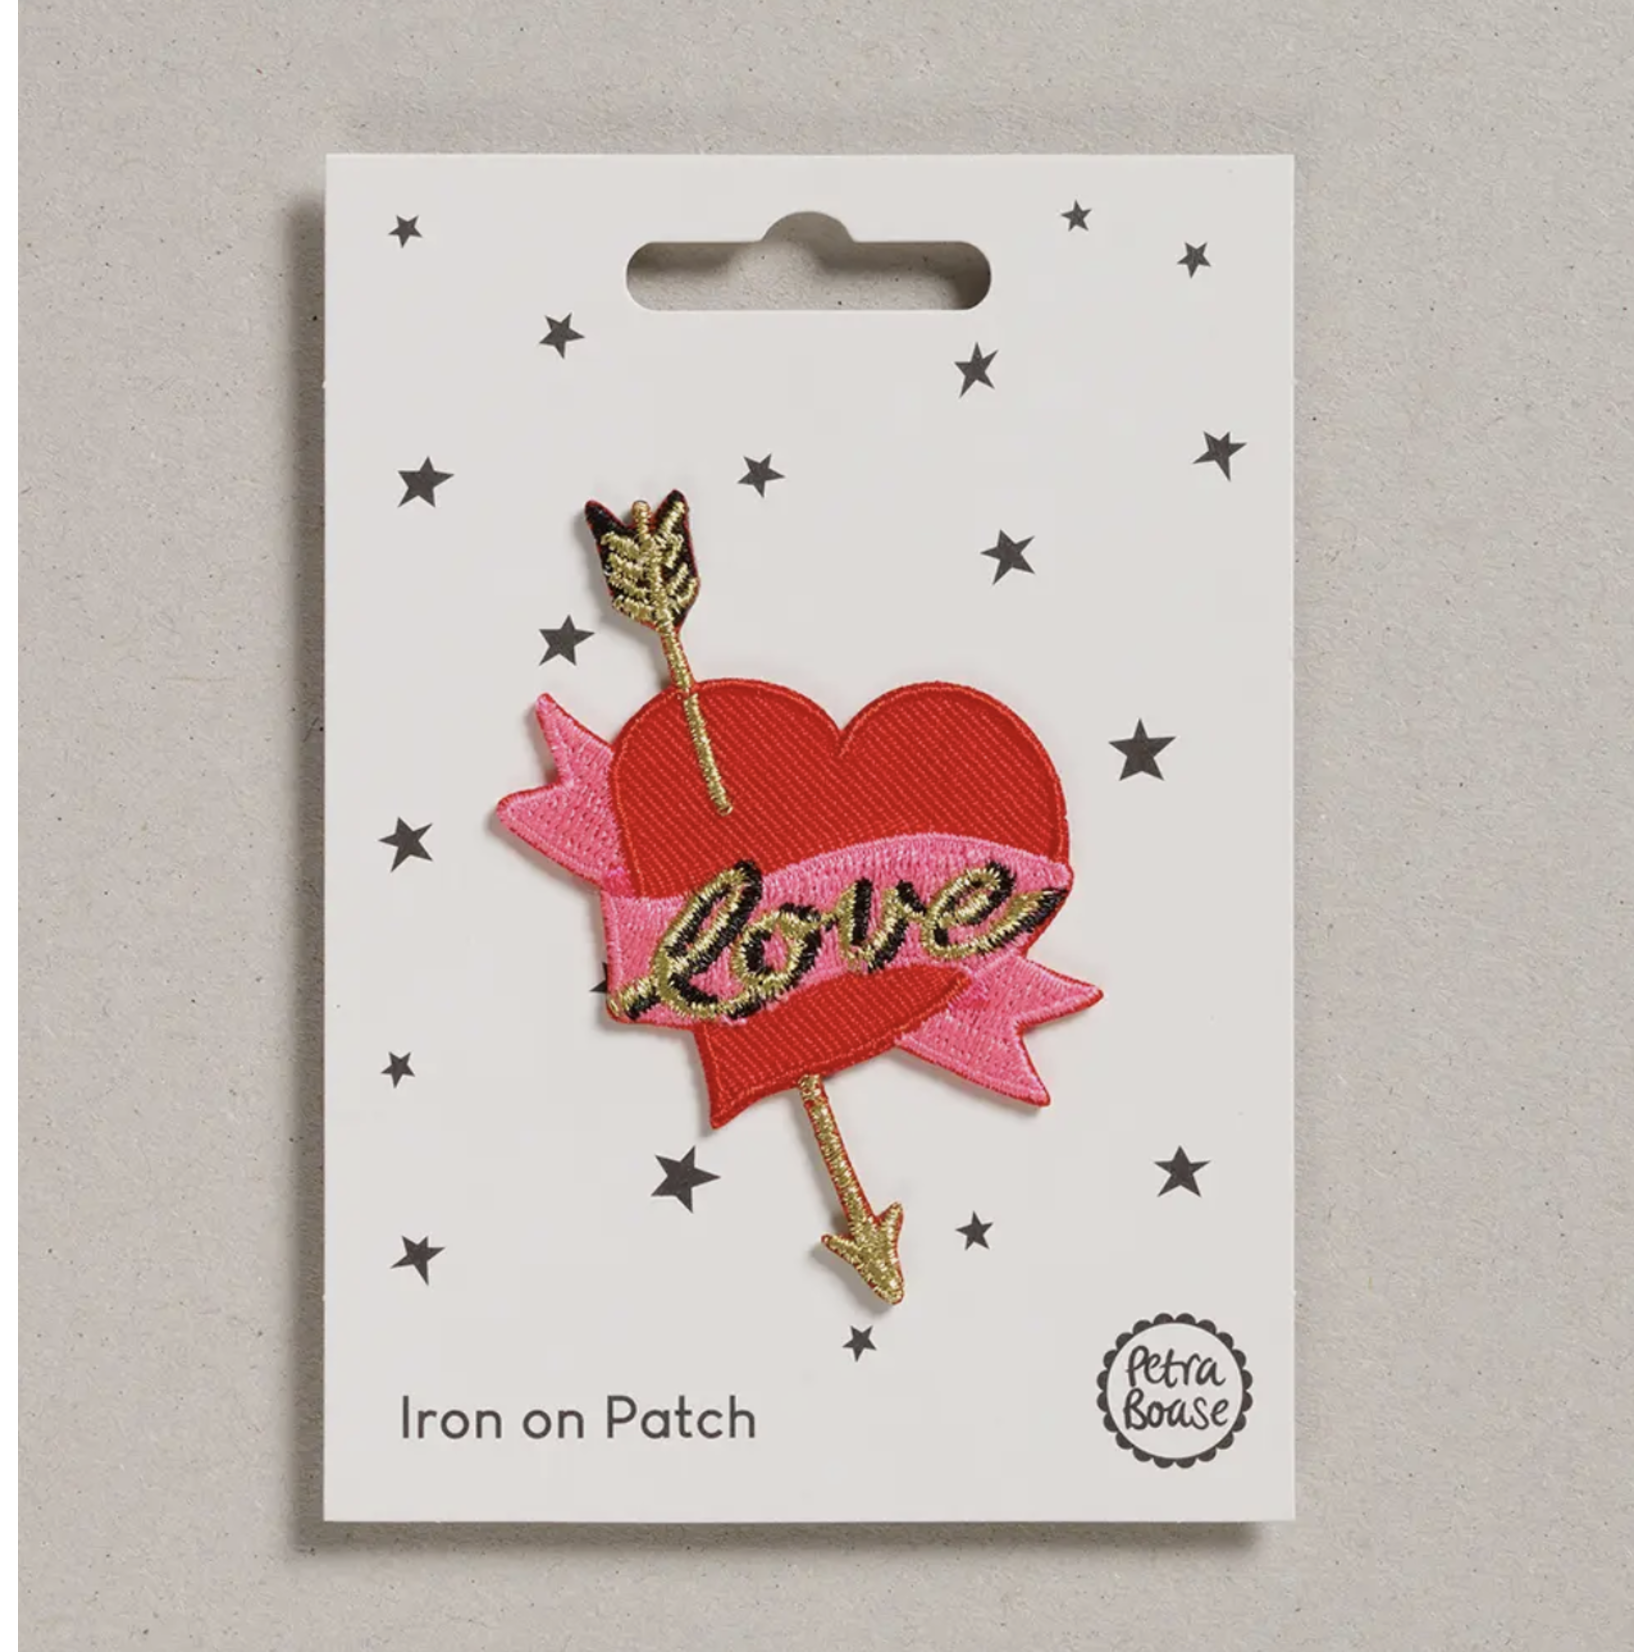 Petra Boase Ltd Iron on Patch - Love Heart with Arrow